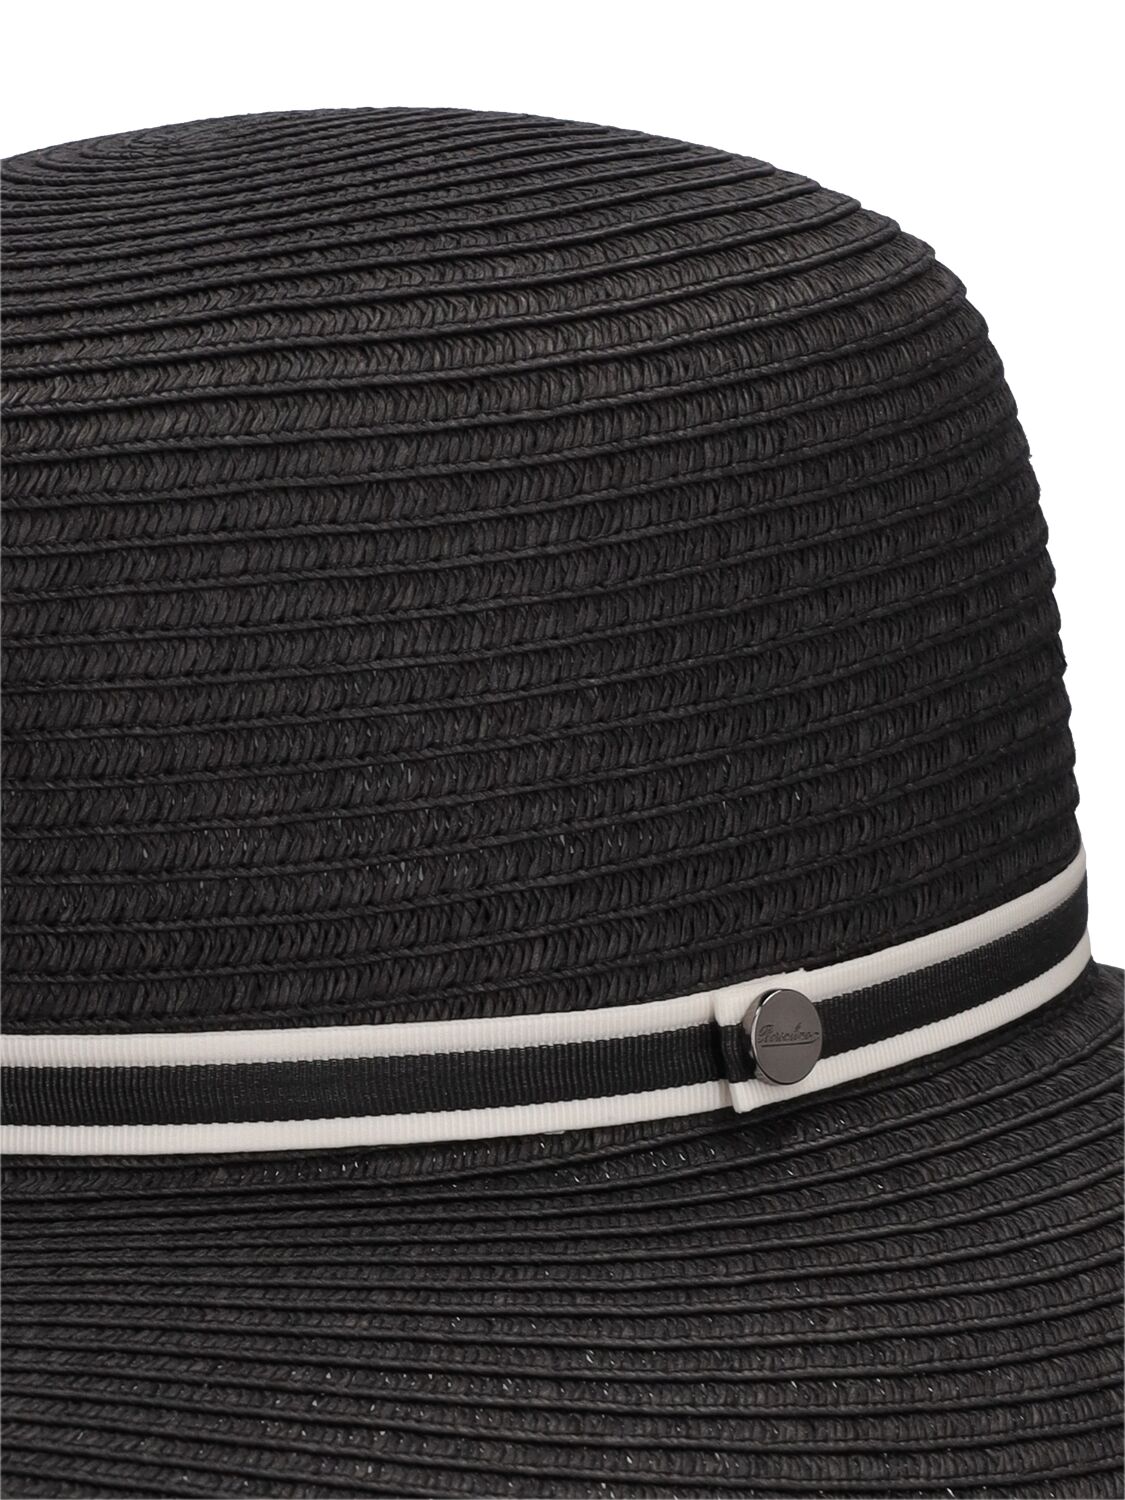 Shop Borsalino Giselle Foldable Straw Hat In Nero,panna